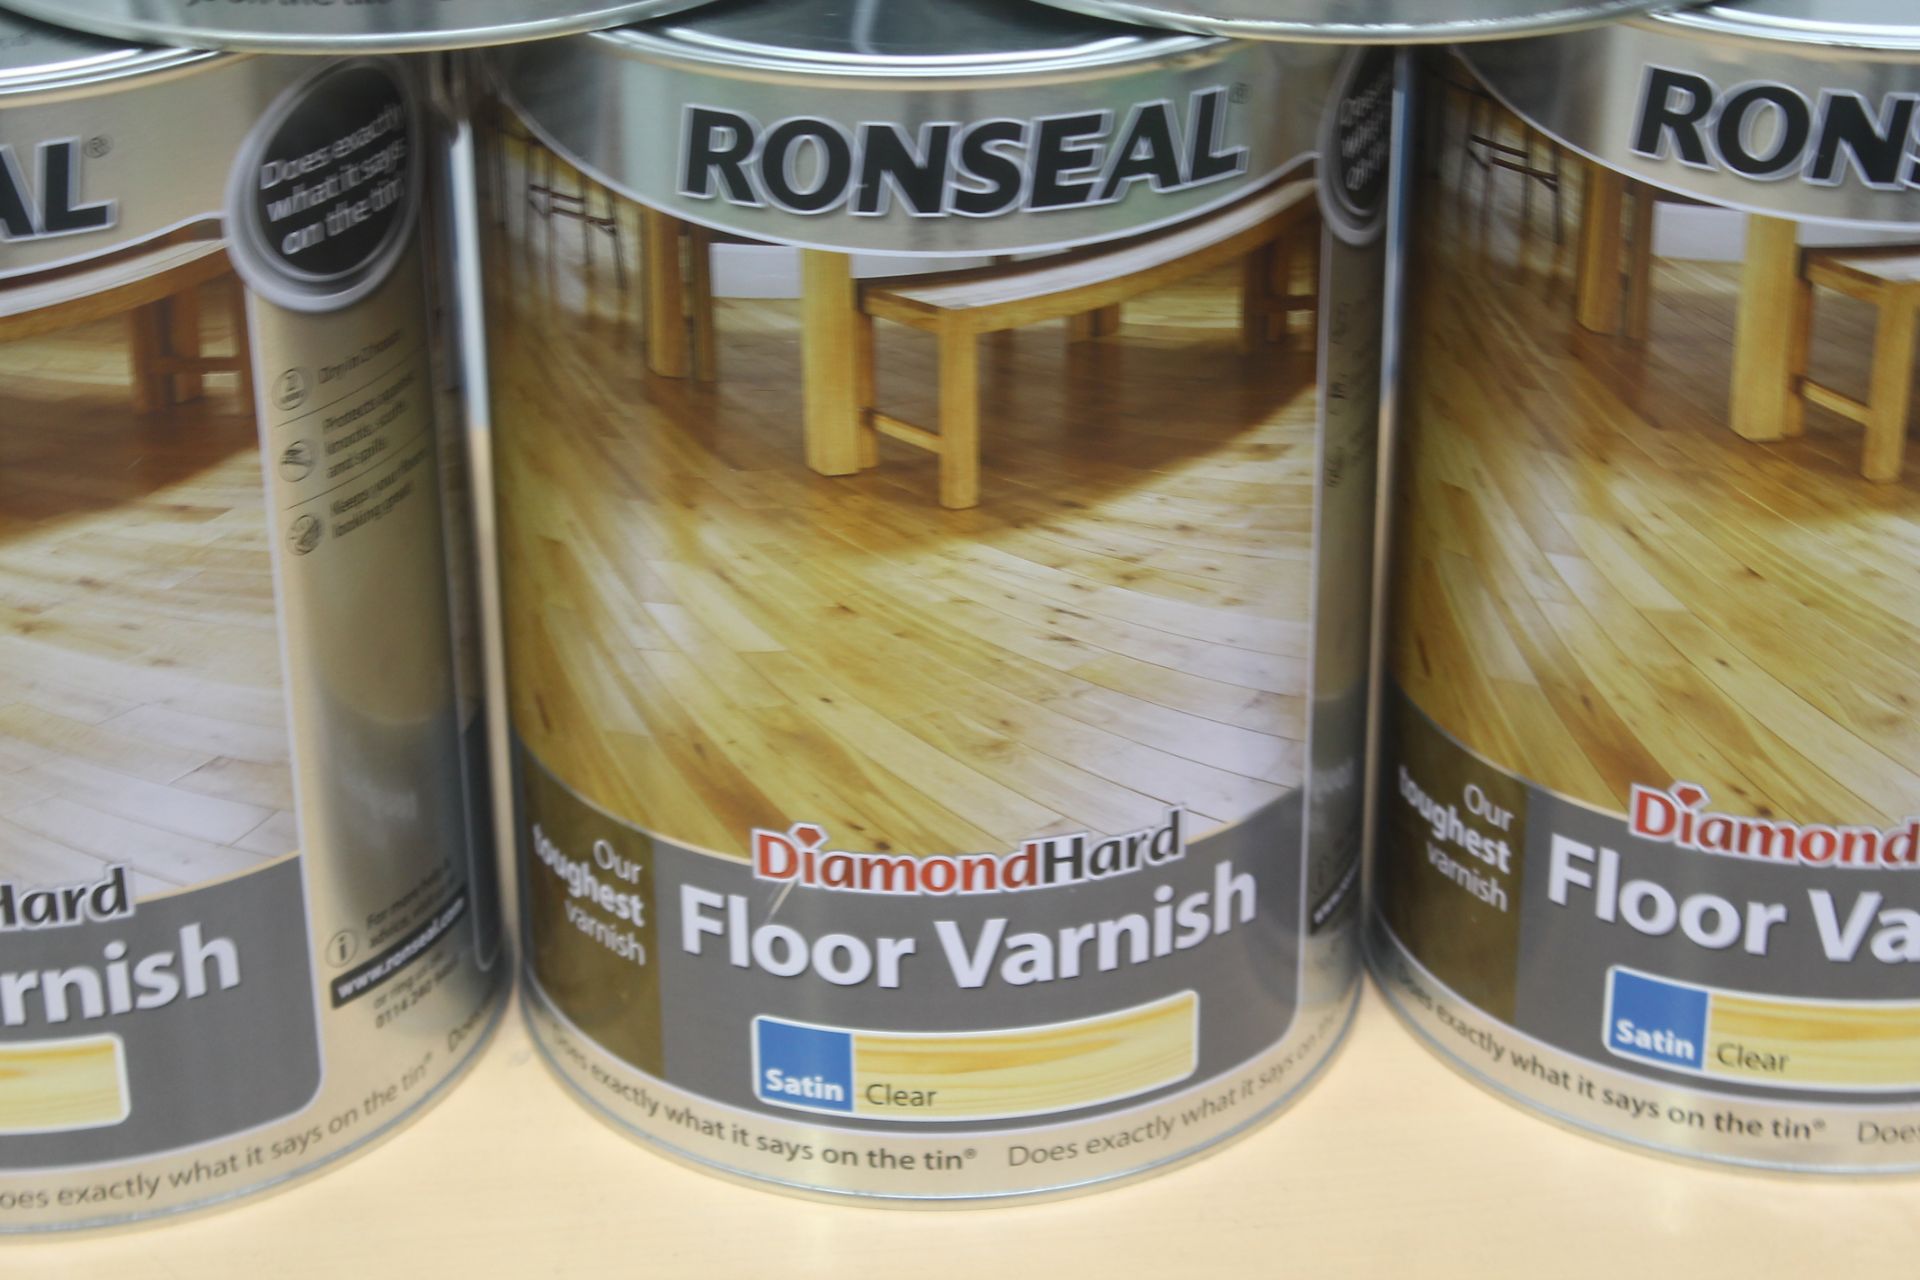 1 x 5L Ronseal Diamond Hard Floor Varnish (Satin Clear)